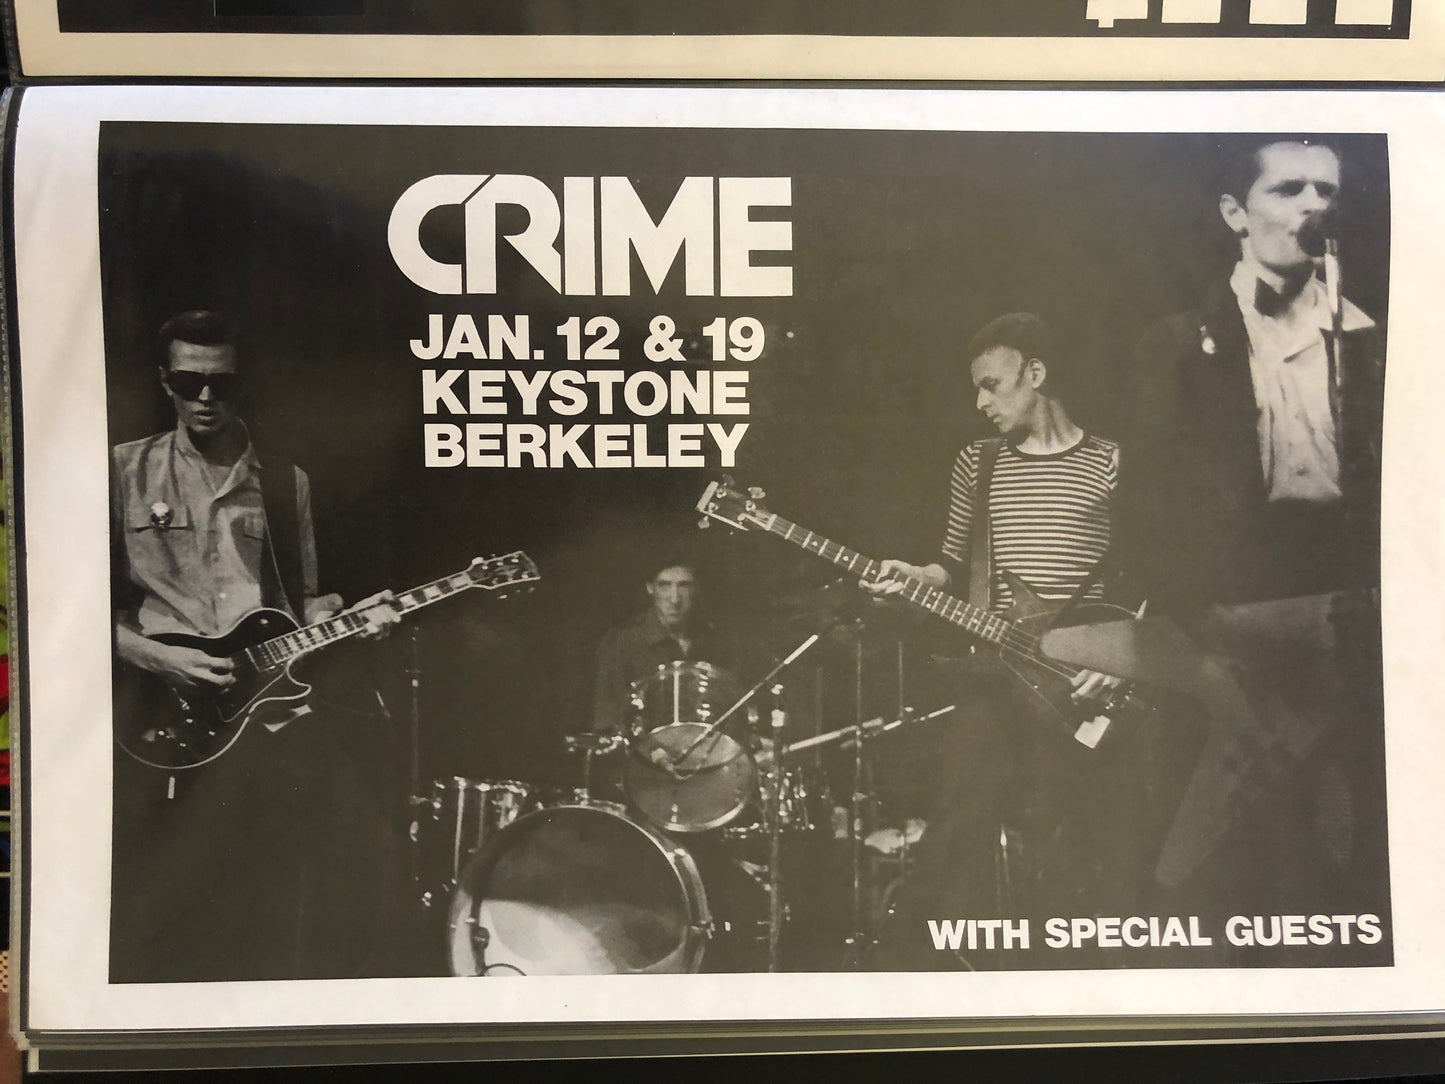 James Stark "Crime, Keystone Berkeley" Poster